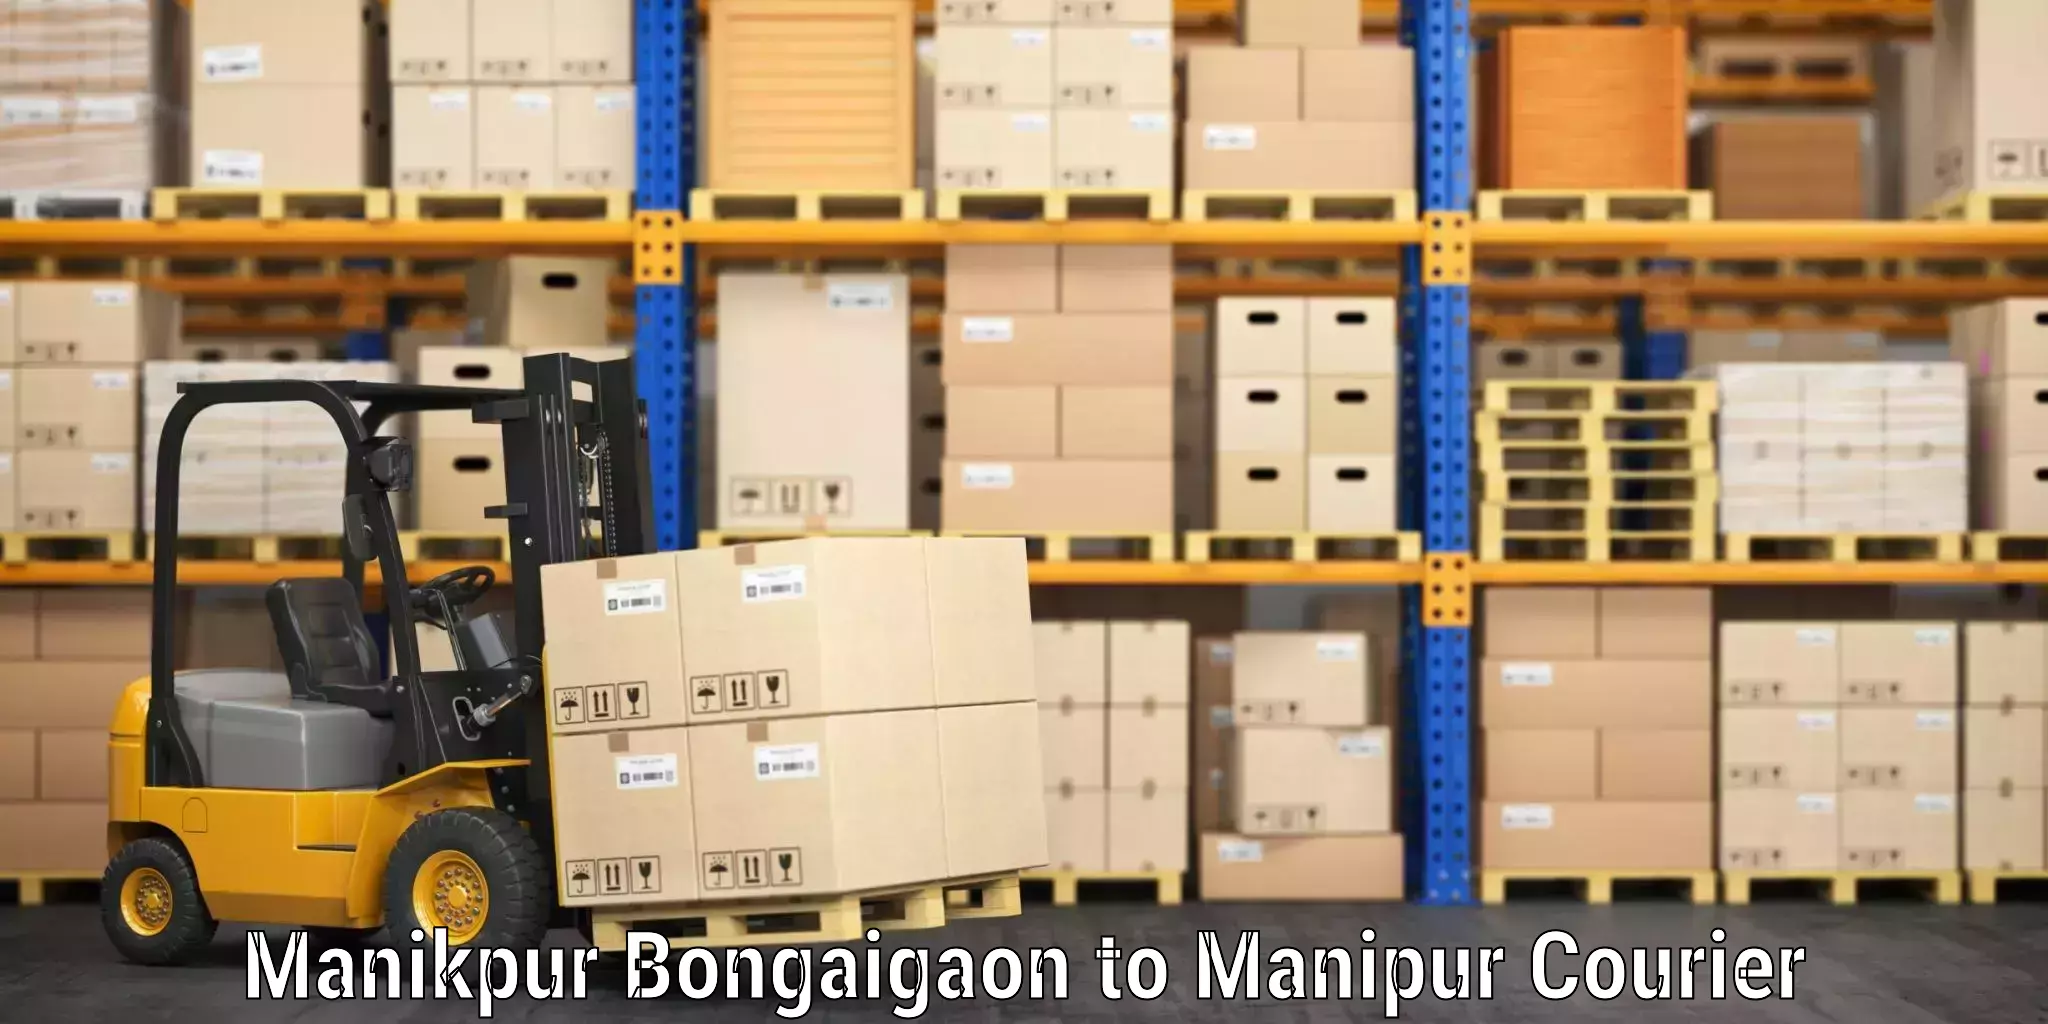 Baggage transport innovation Manikpur Bongaigaon to Manipur